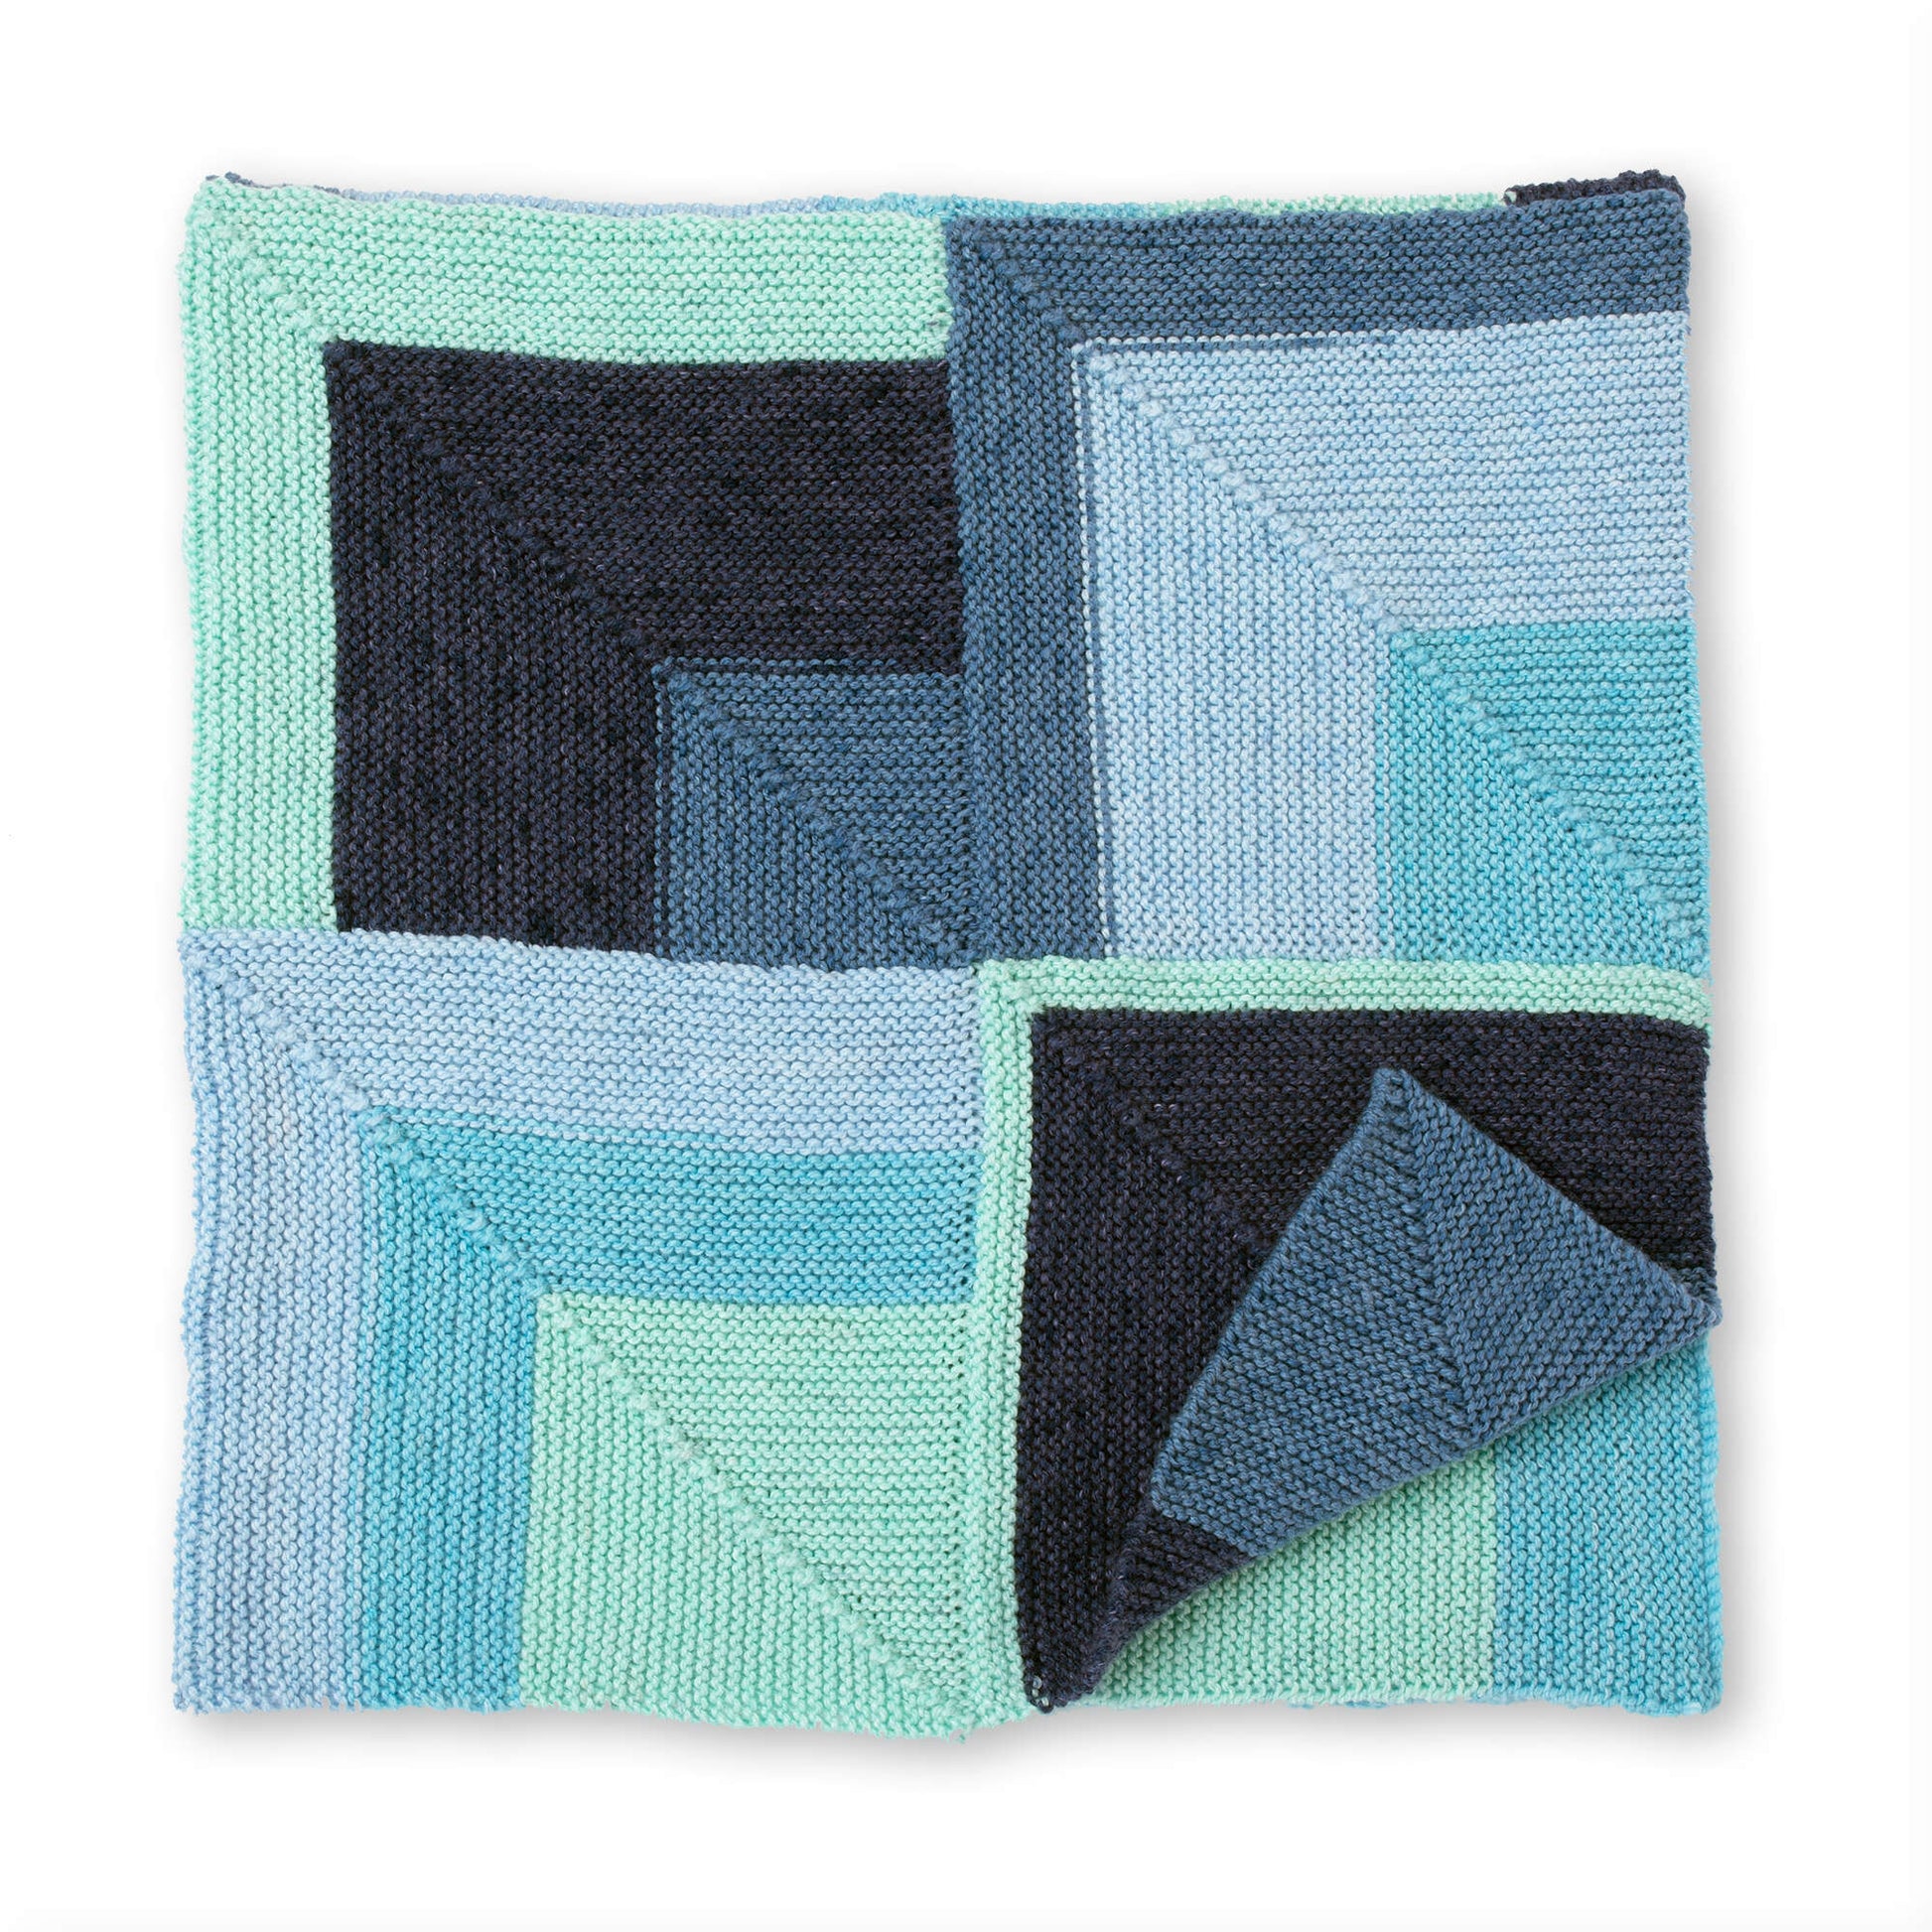 Free Bernat Meeting Corners Knit Blanket Pattern